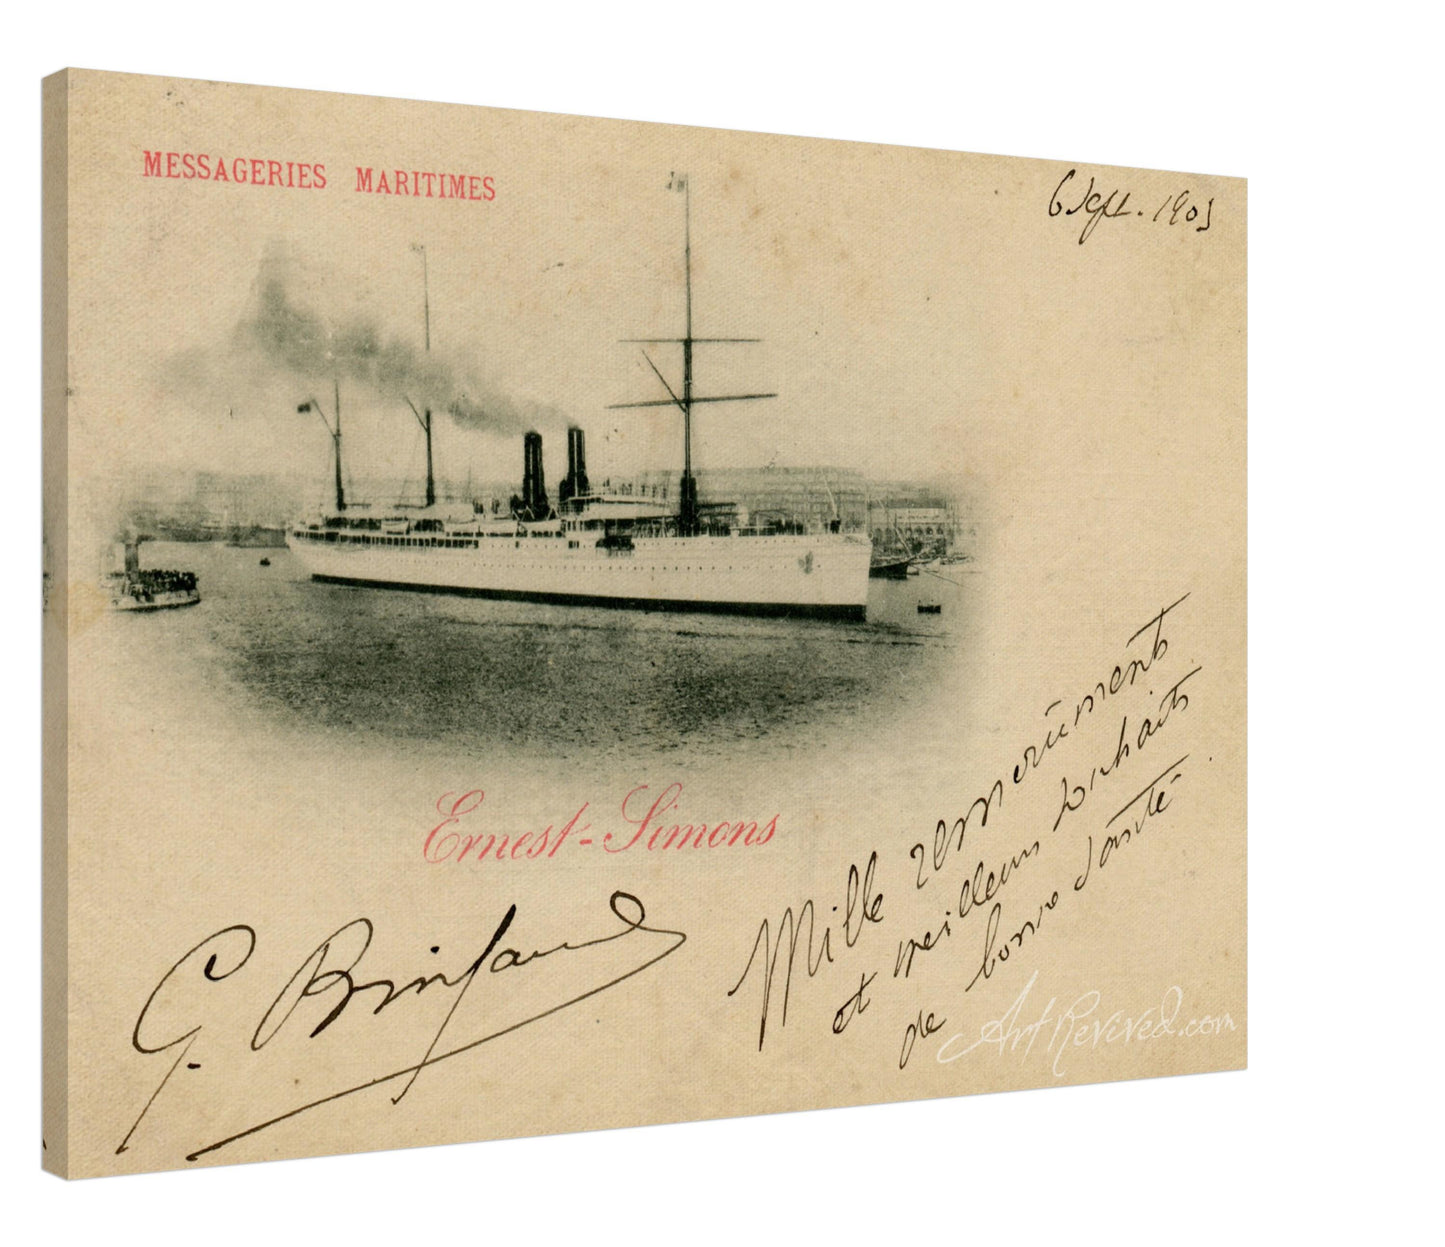 Steamship Ernst-Simons